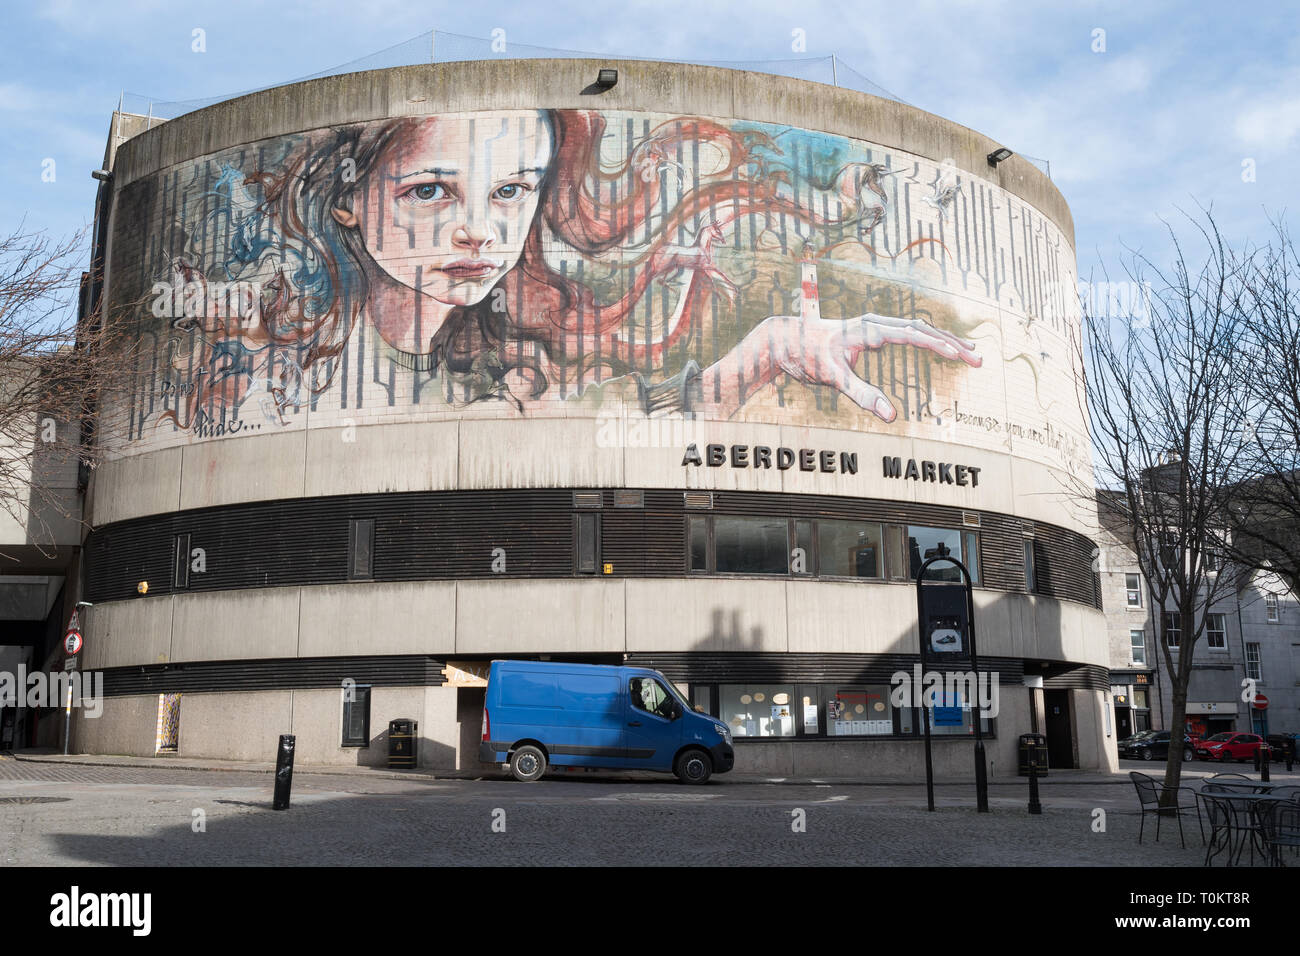 Aberdeen indoor market building with street art by Herakut, The Green, Aberdeen, Scotland, UK Stock Photo